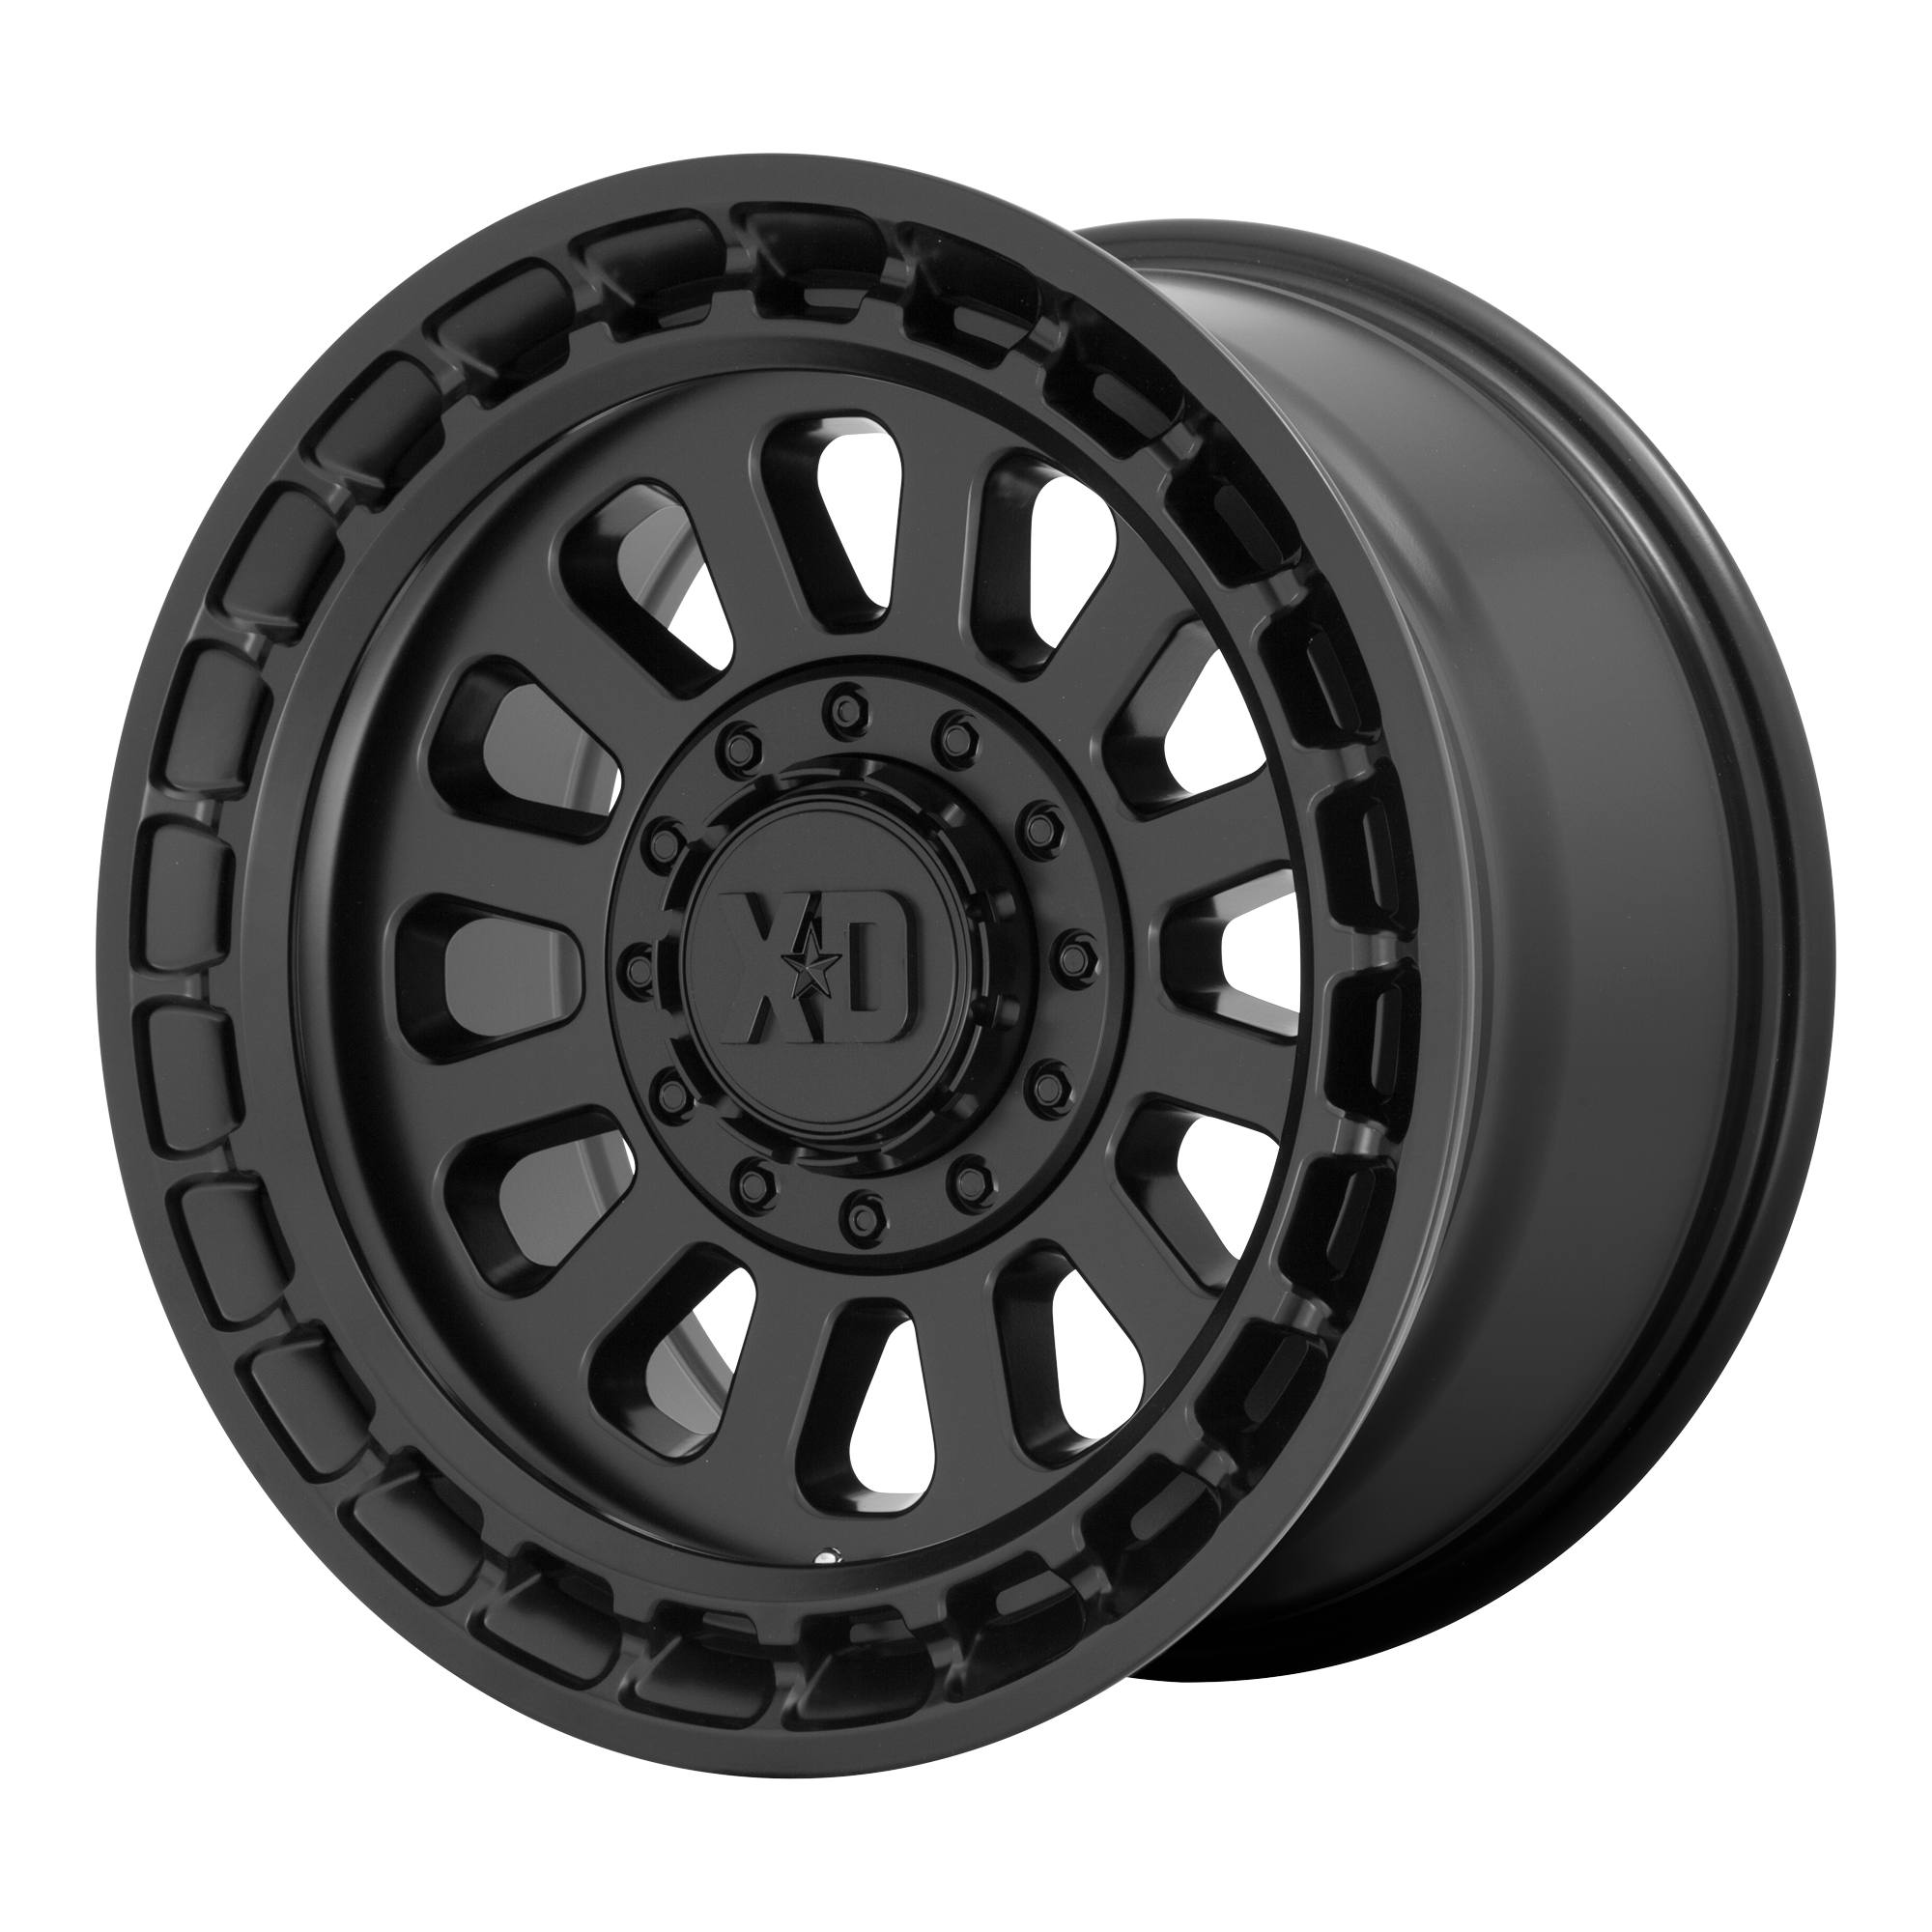 XD 17"x9" Non-Chrome Satin Black Custom Wheel ARSWCWXD85679035718